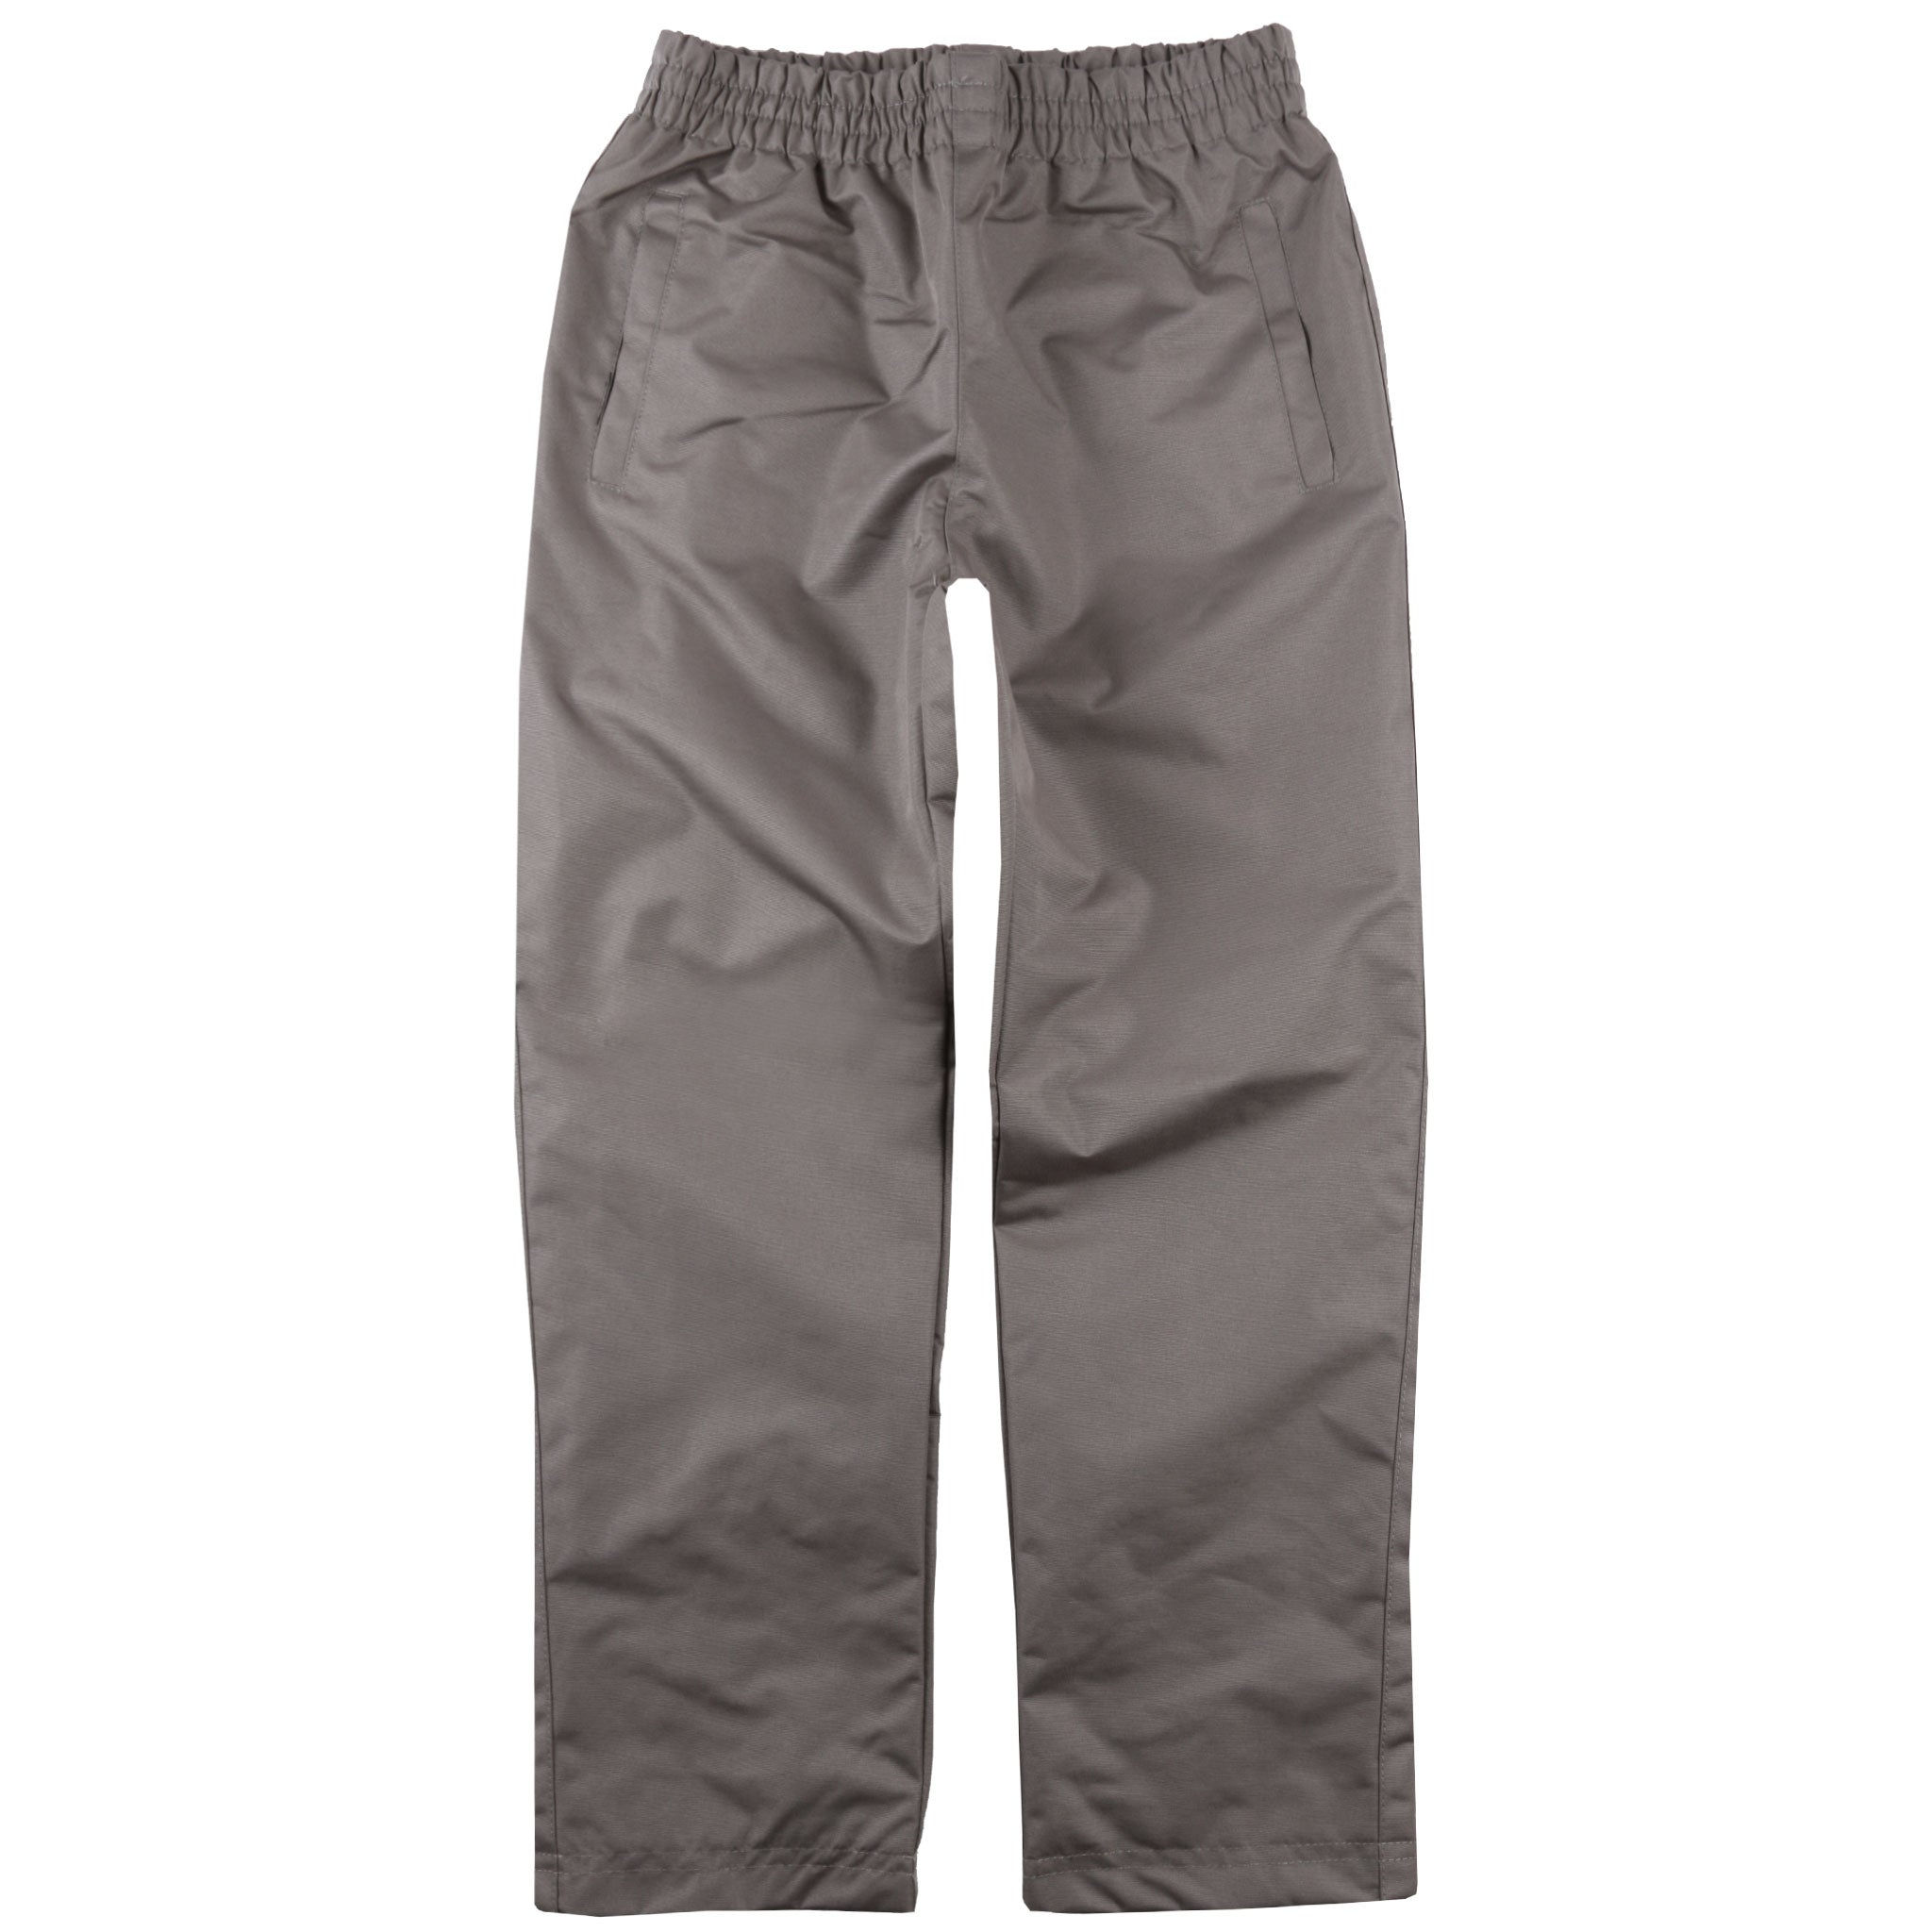 Grey Unisex Kids Splash Pants - Conifere